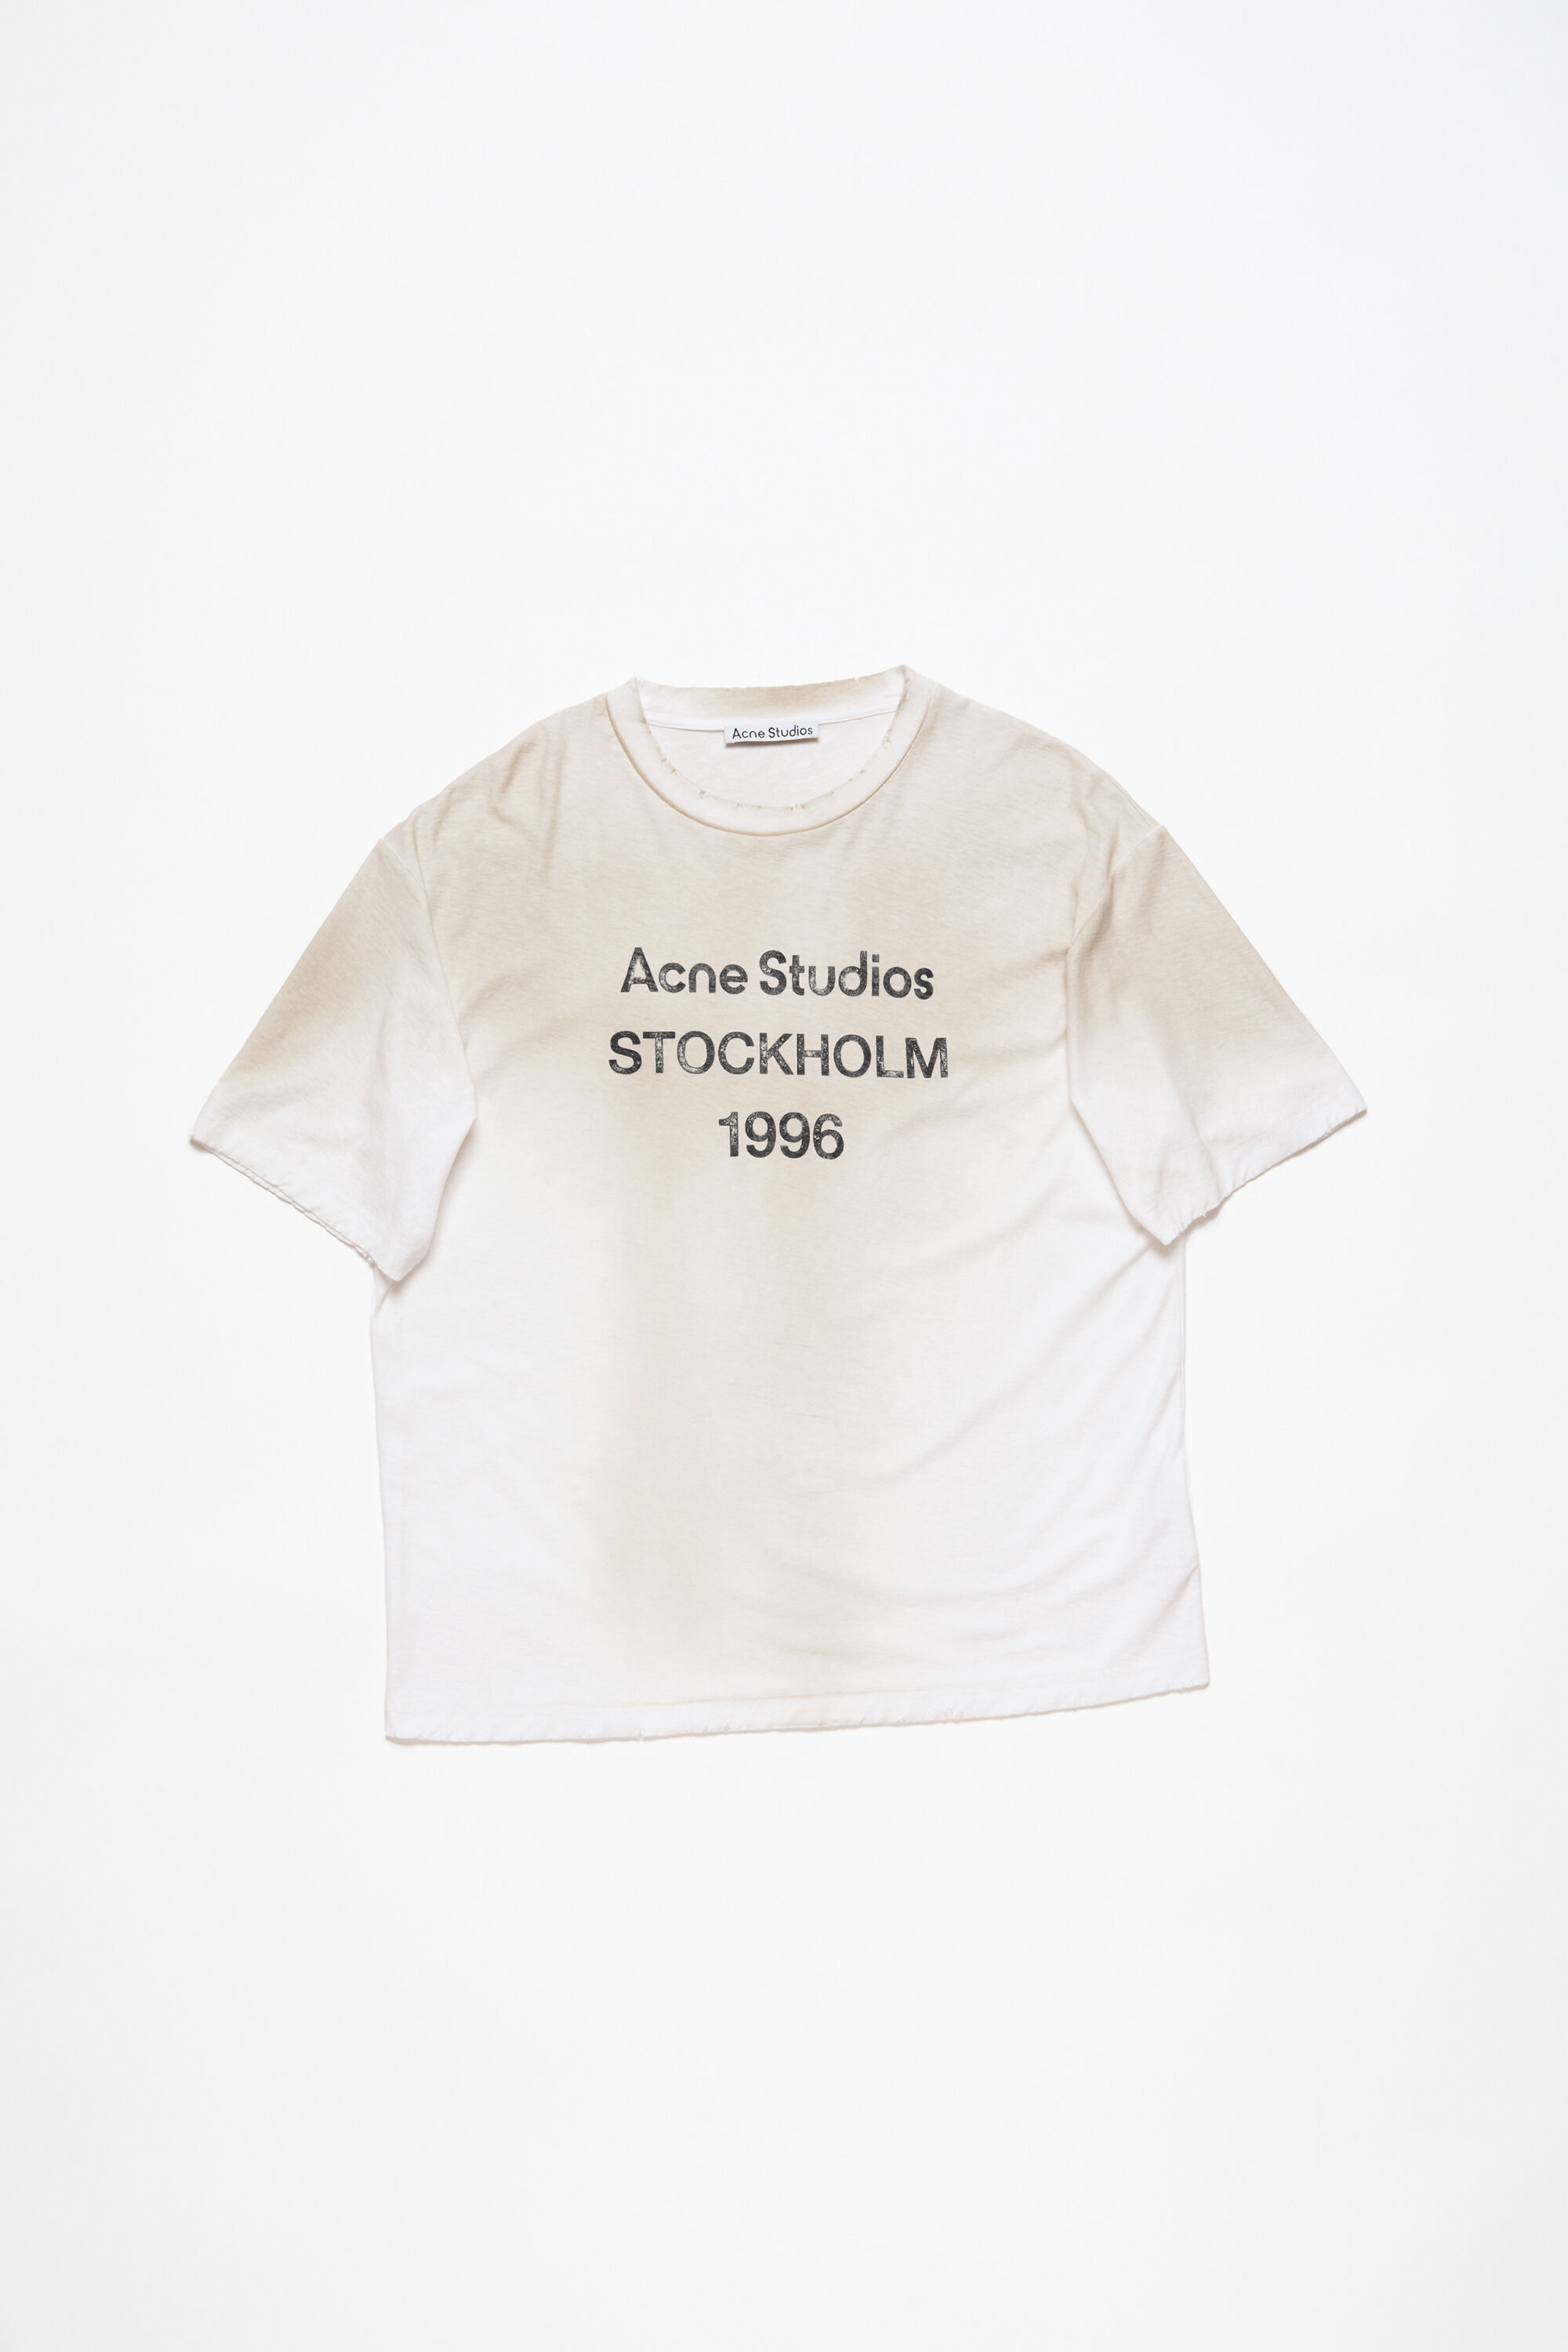 Acne Studios 1996 Tシャツグレー オーバーサイズ定価44000ほどです